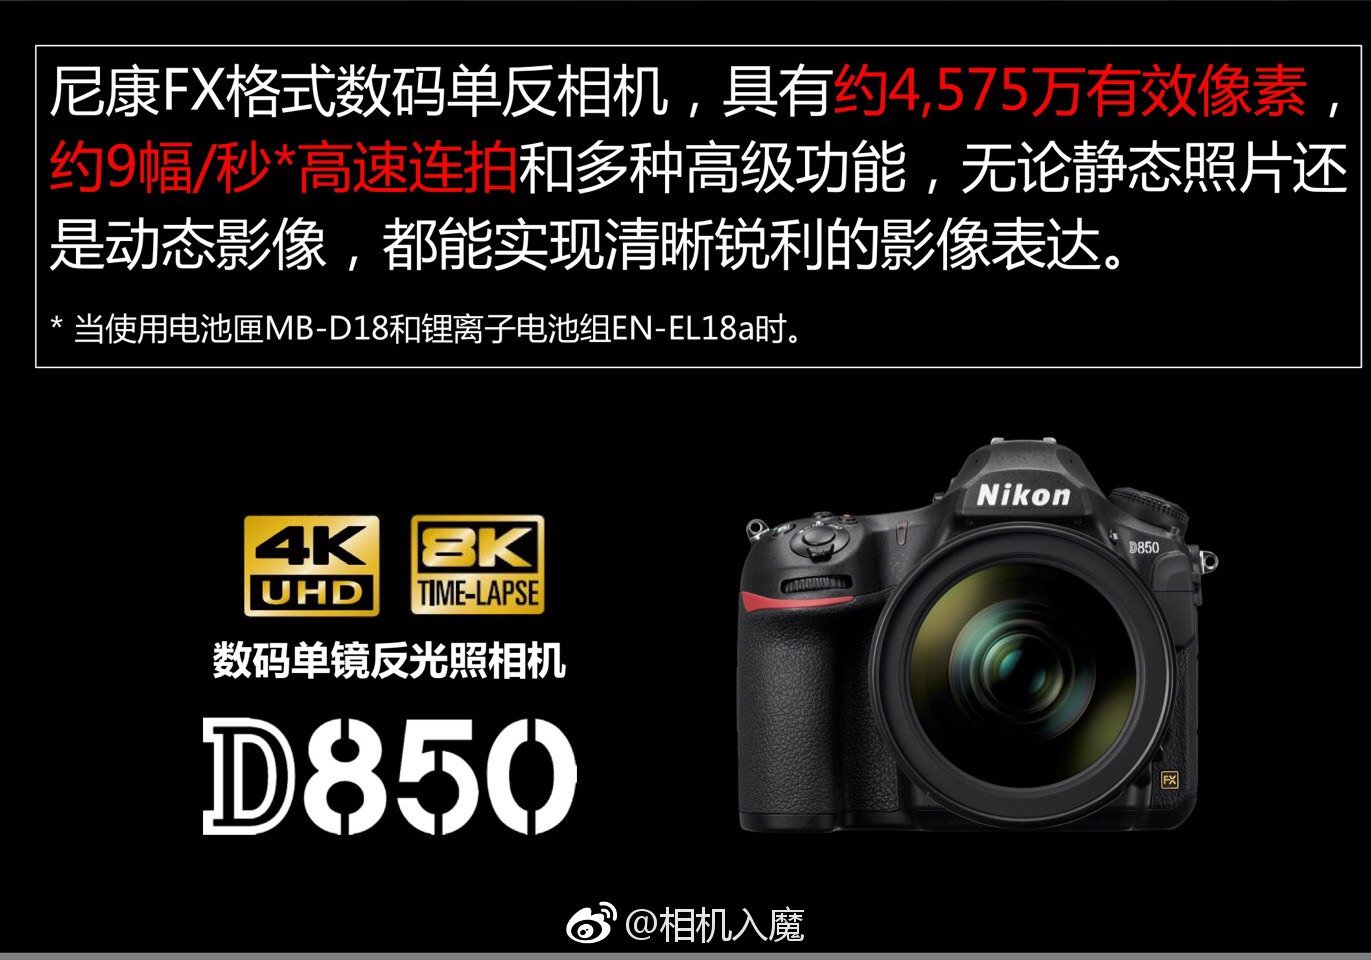 Nikon-D850-camera-presentation-leaked-1.jpg